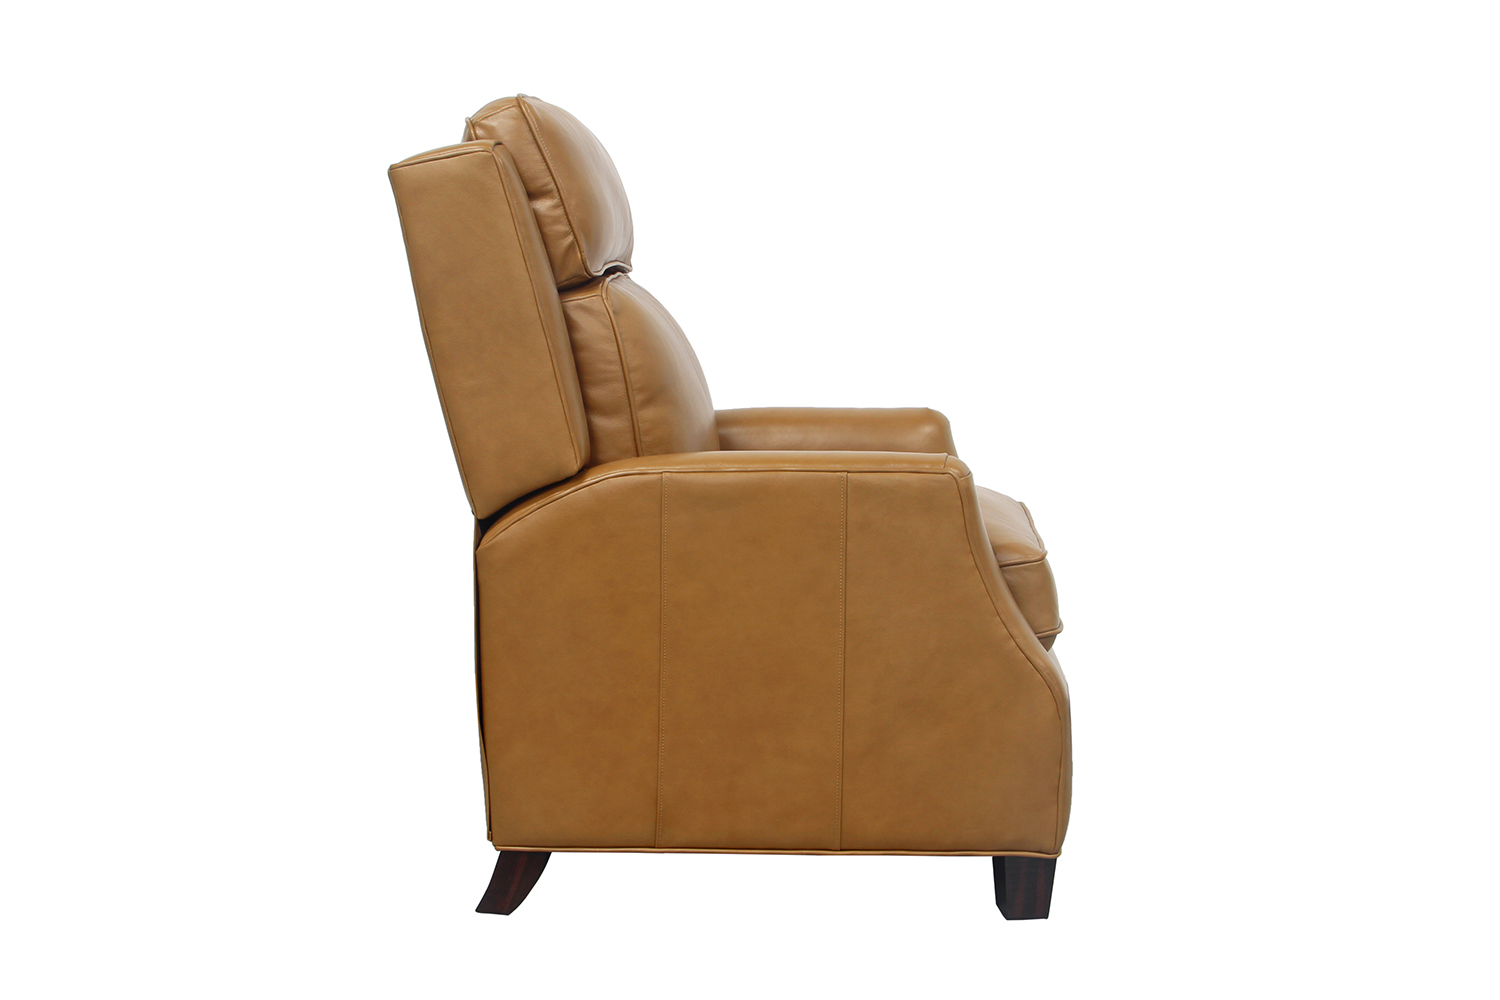 Barcalounger Nixon Recliner Chair - Shoreham Ponytail/All Leather